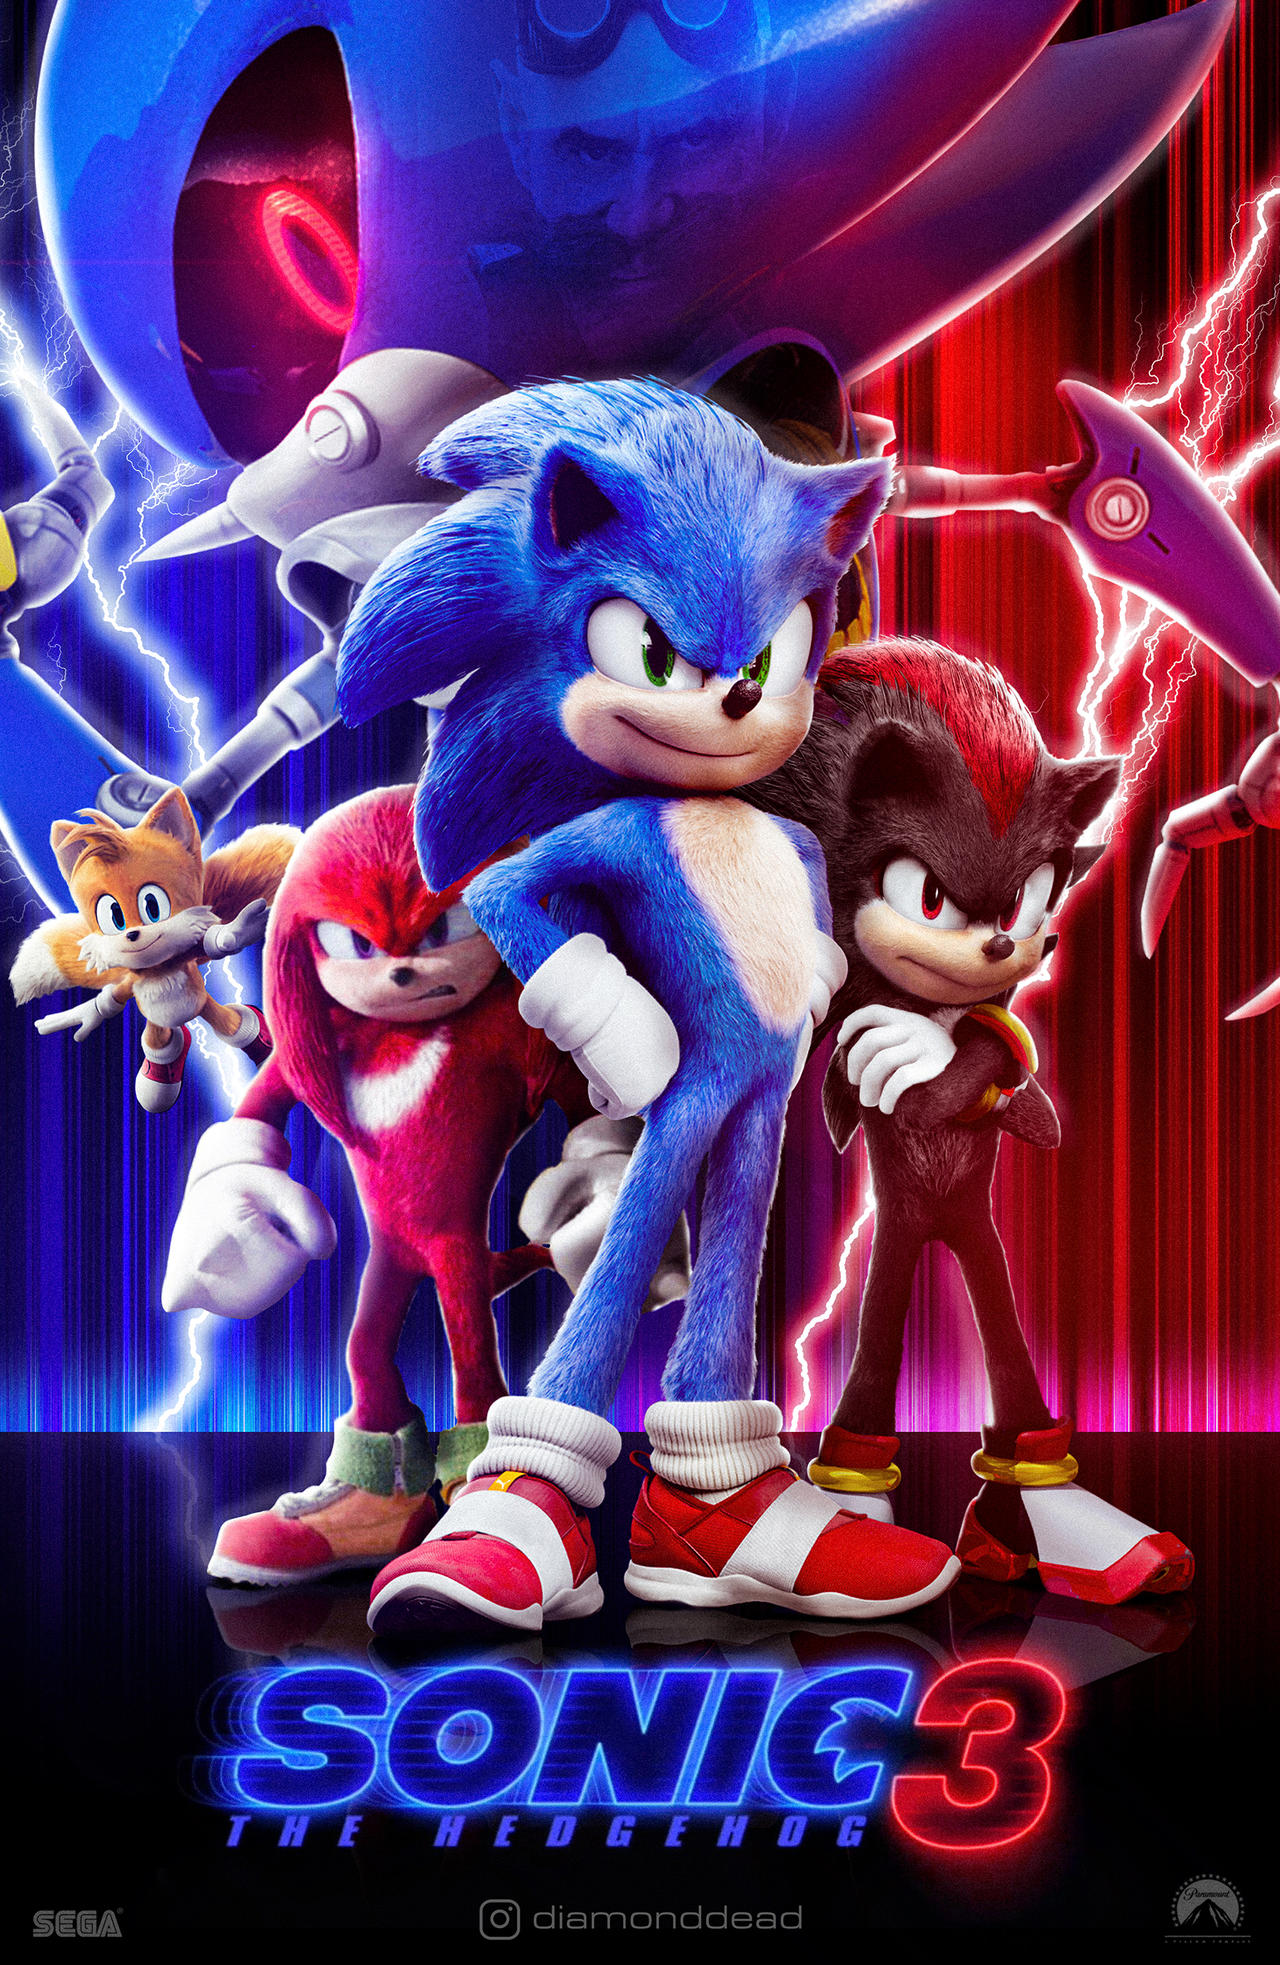 Sonic 3 Poster By diamonddeadArt Fandom